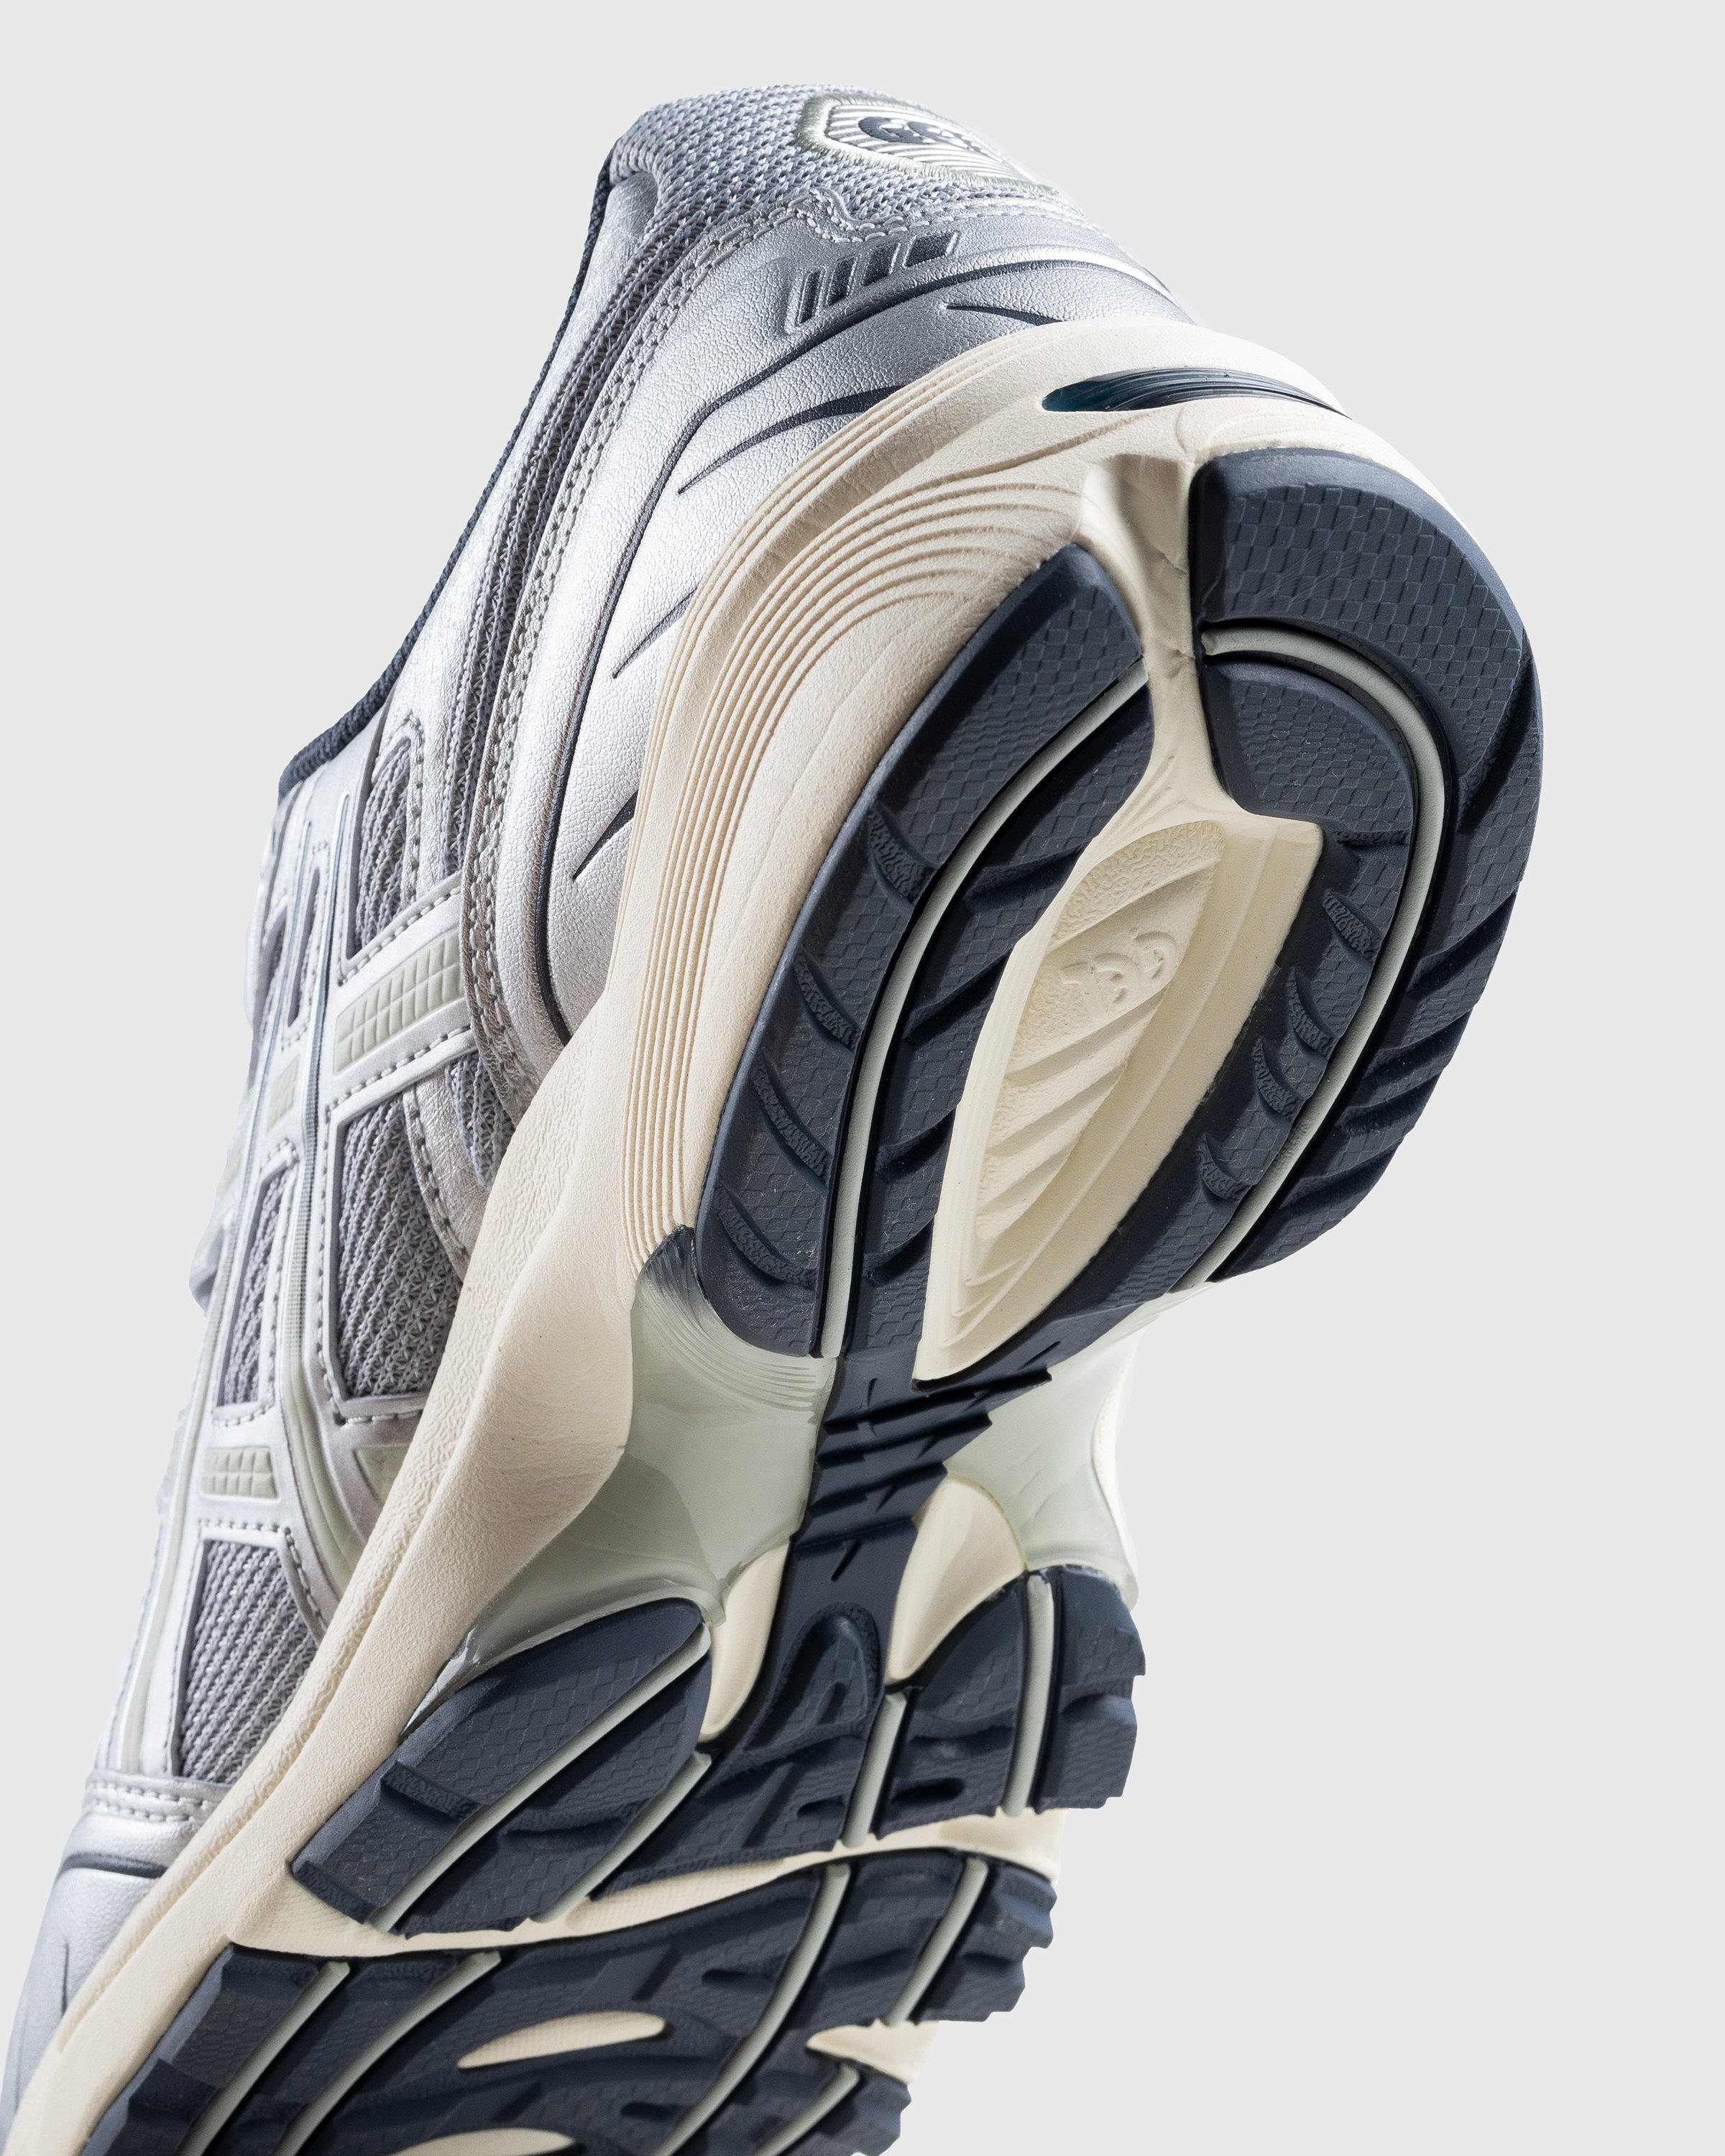 asics - GEL-1090 Piedmont Gray/Tarmac - Footwear - Grey - Image 6